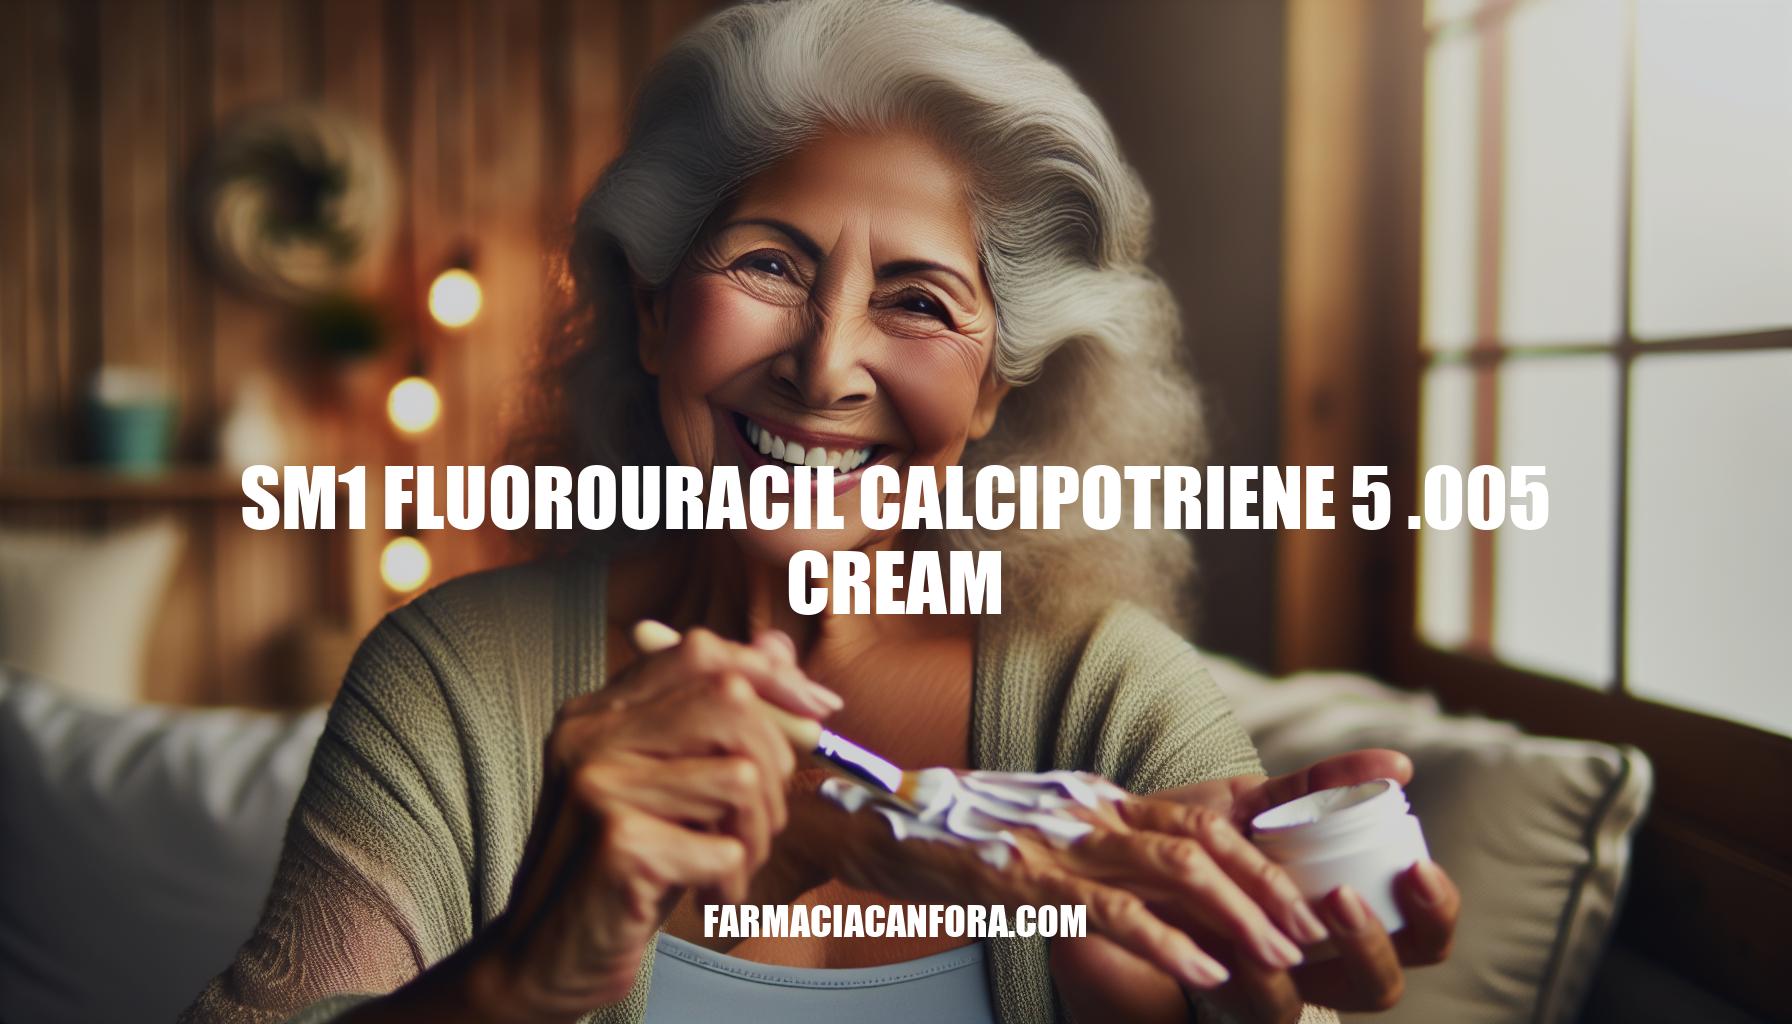 Benefits of SM1 Fluorouracil Calcipotriene 5 .005 Cream